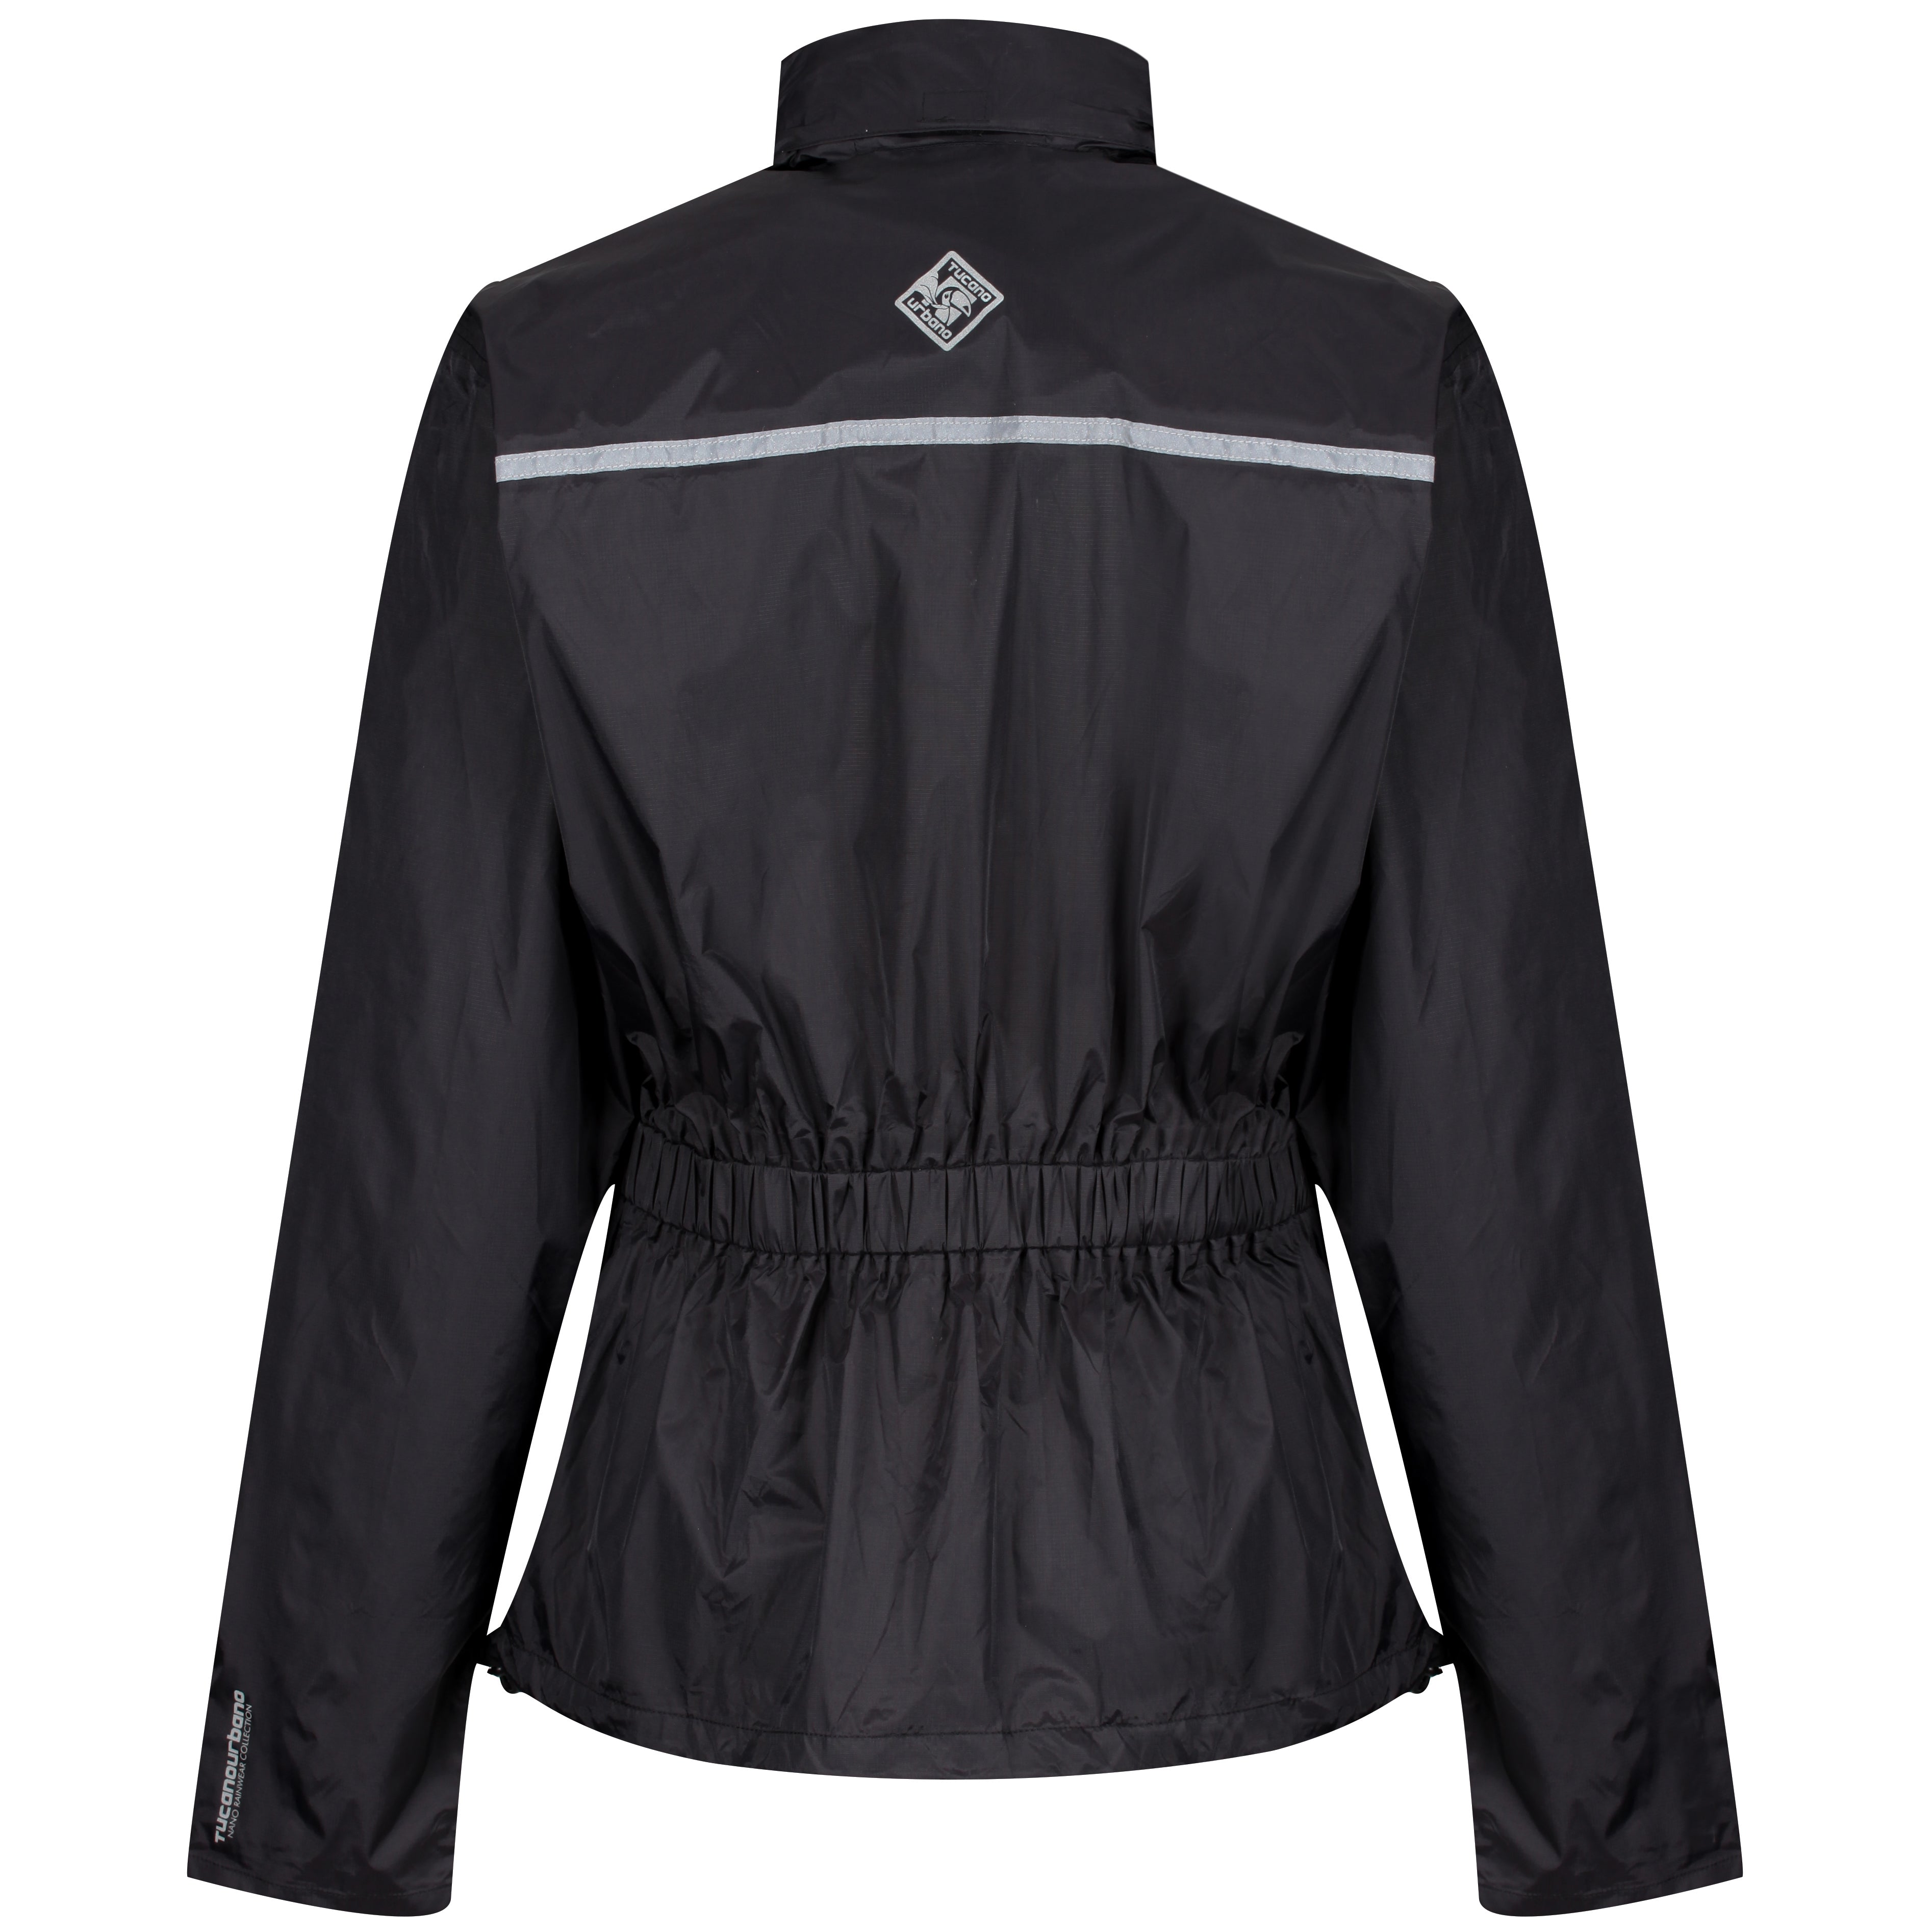 Waterproof motorcycle black jacket from the back